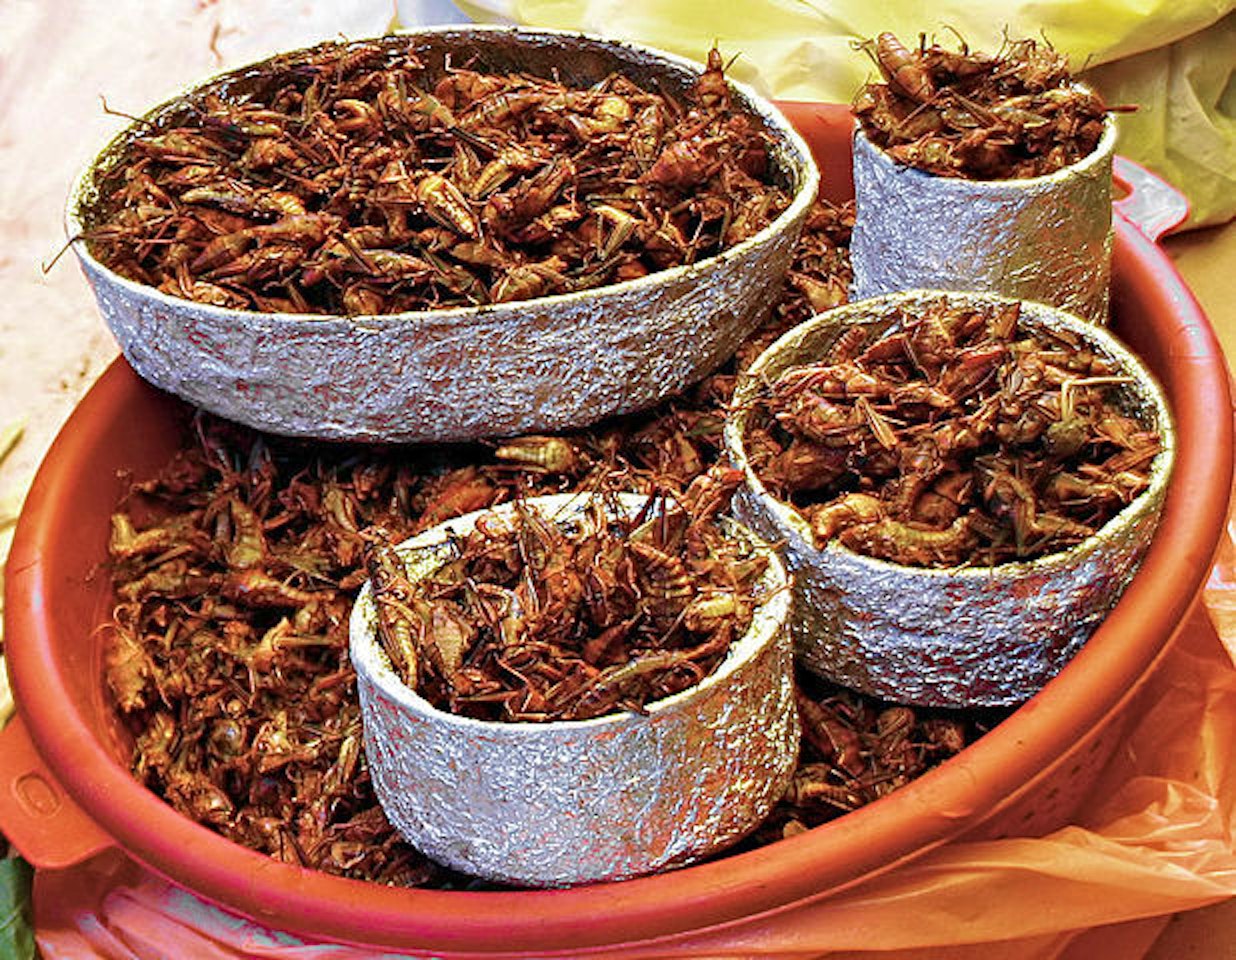 A basket of chapulines aka roasted crickets.